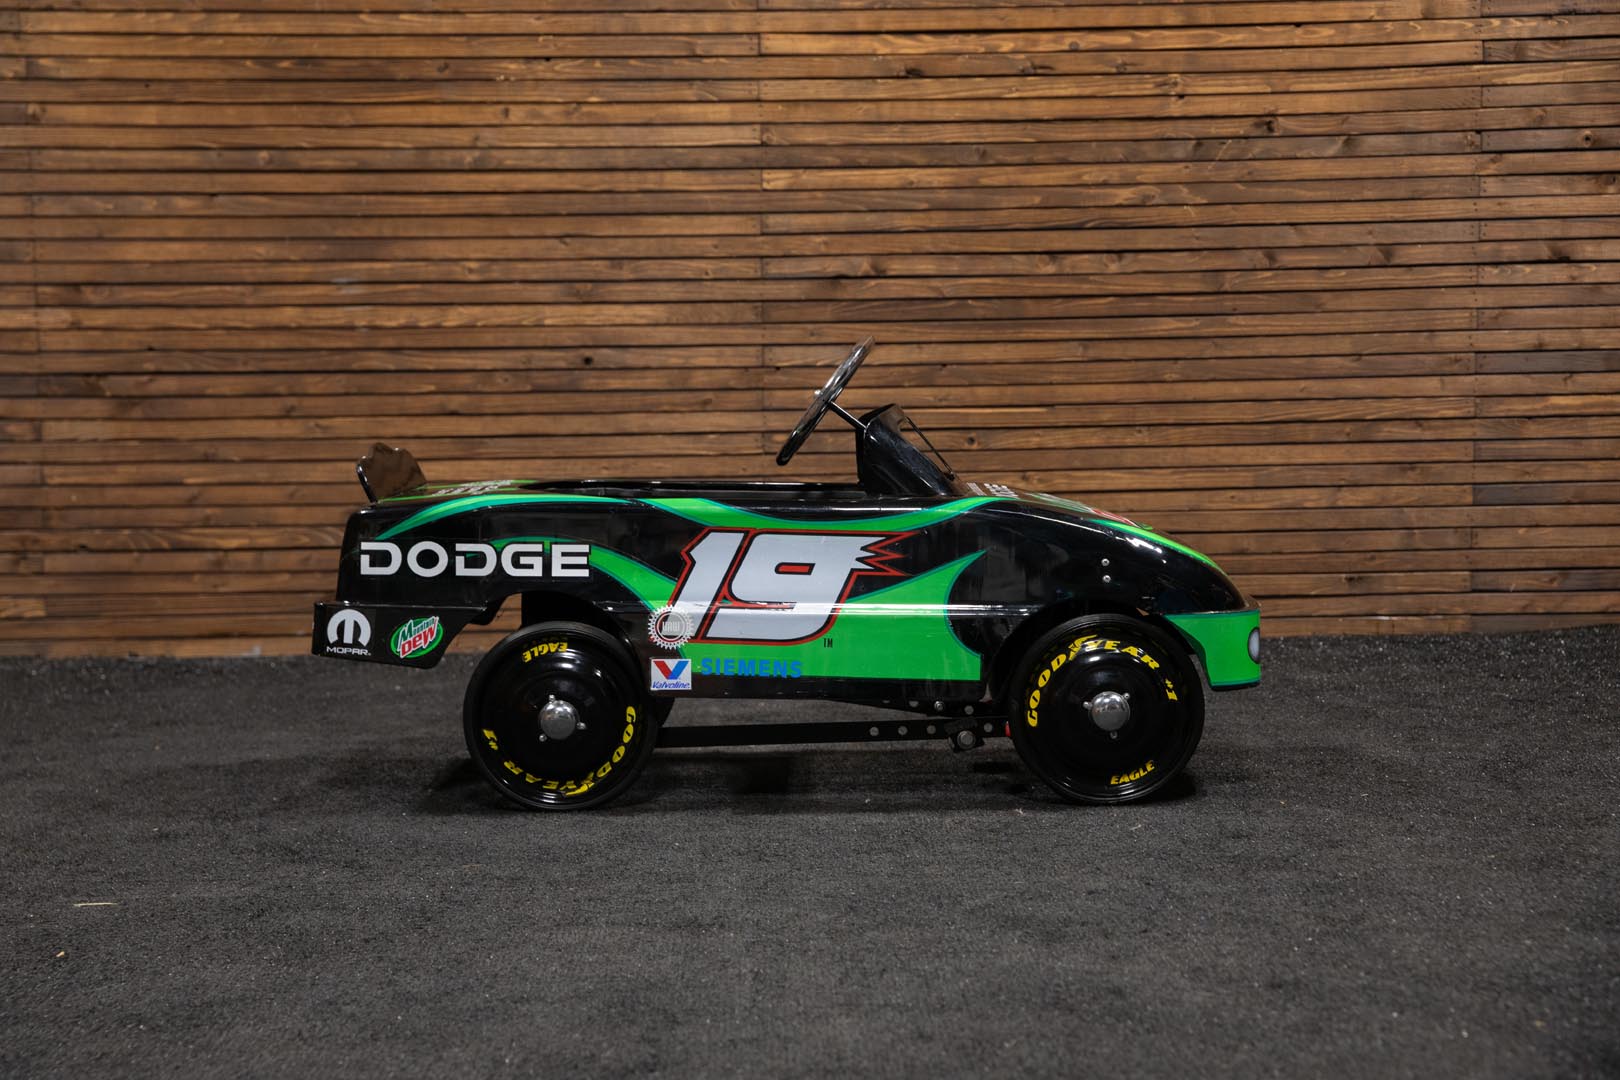  Dodge/Mountain Dew NASCAR Prom otional Pedal Car 